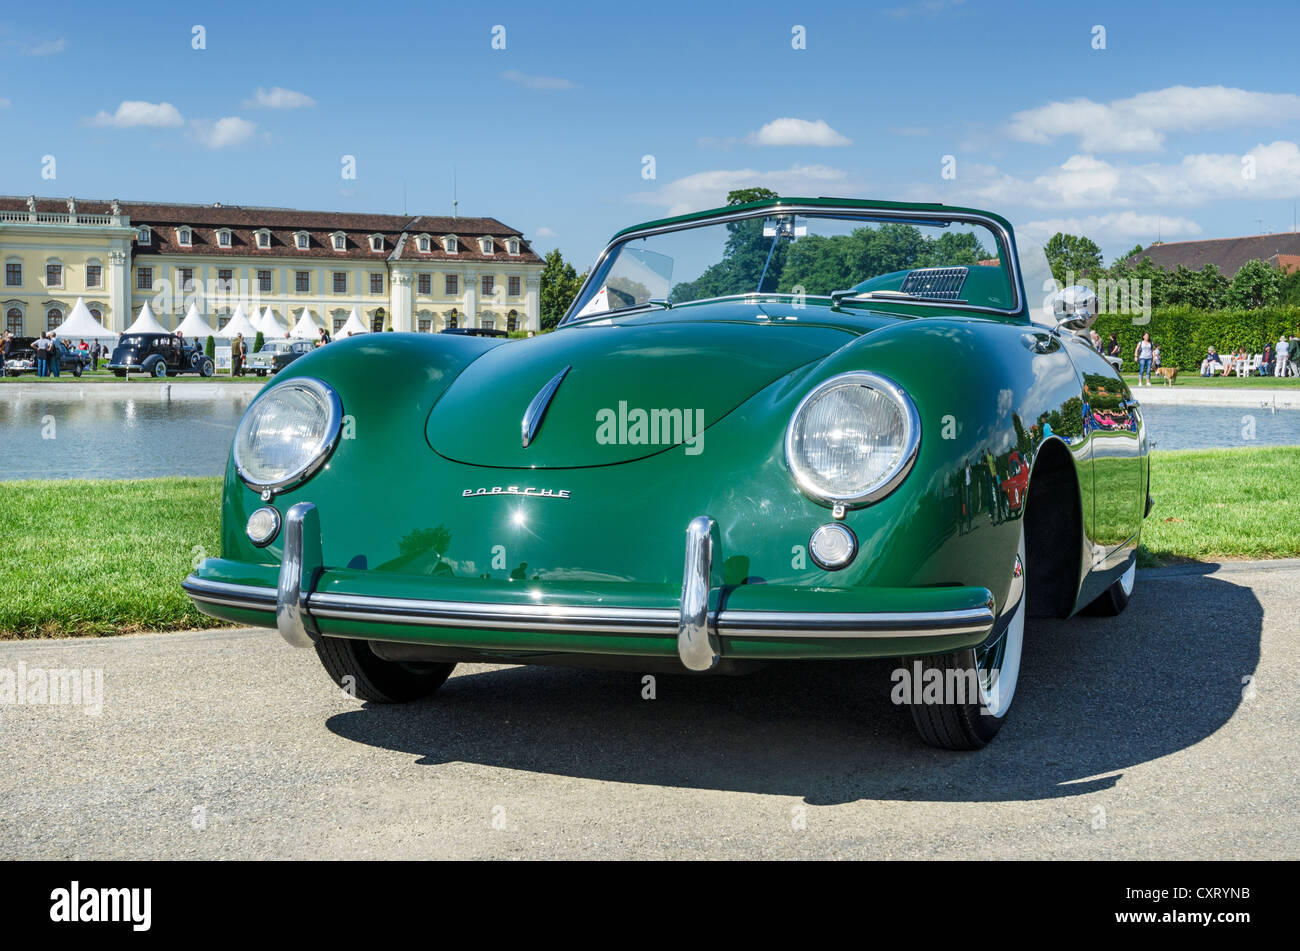 Porsche 356 Speedster, built from 1954, festival of classic cars 'Retro Classics meets Barock', Schloss Ludwigsburg Palace Stock Photo